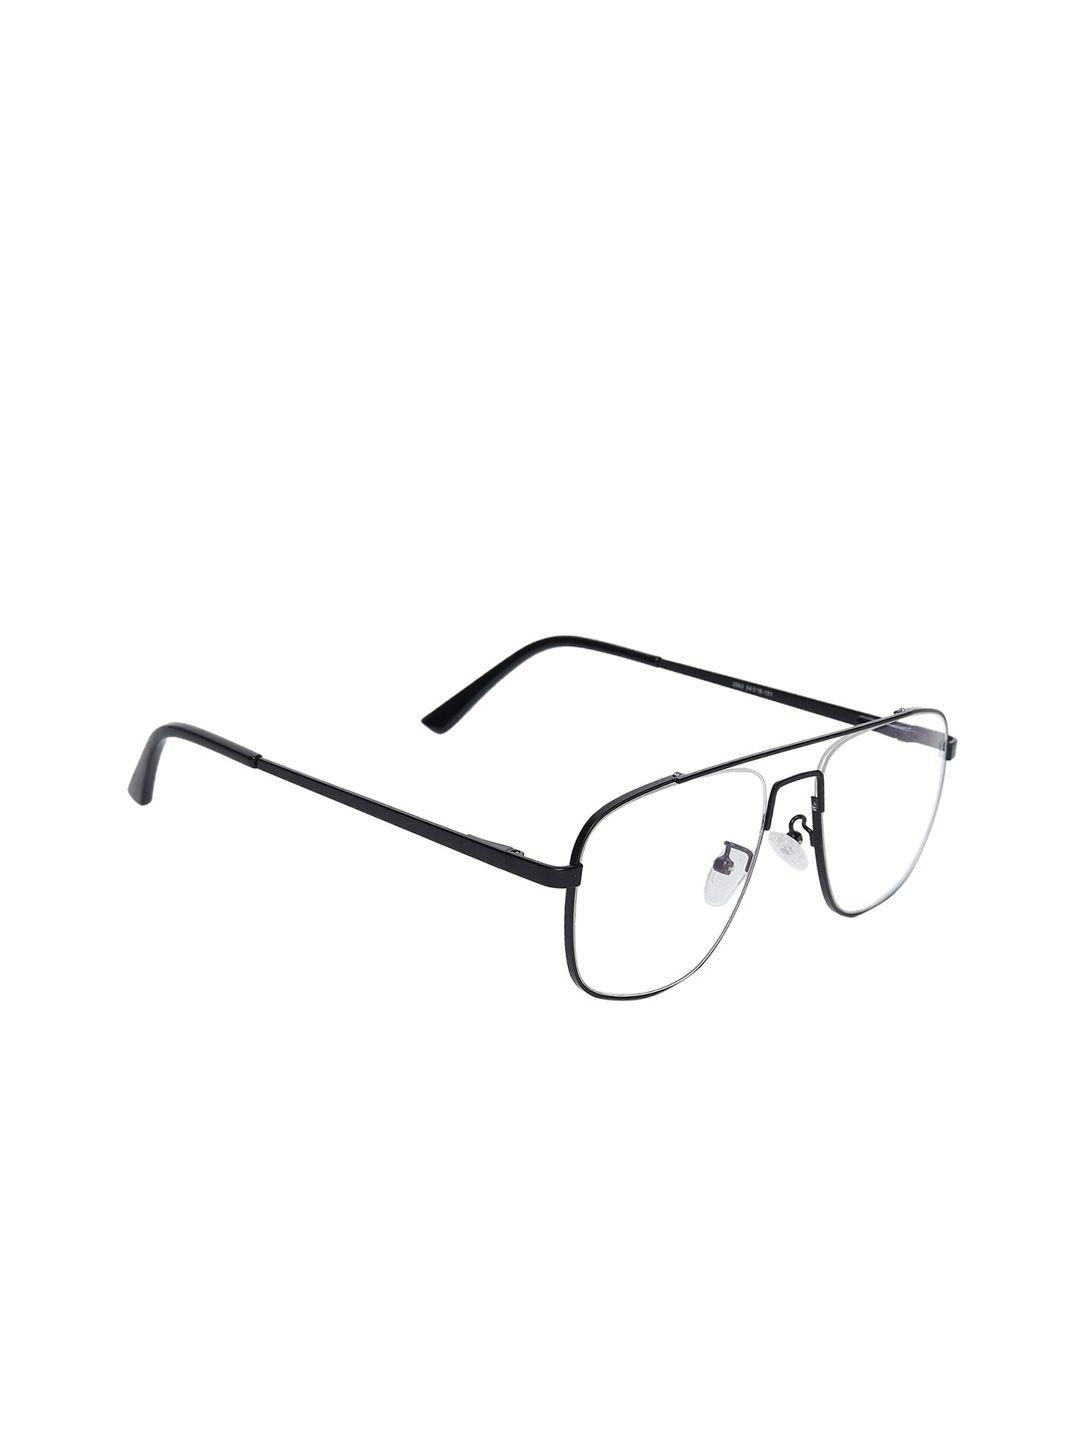 peter jones eyewear unisex black solid square sunglasses a_2063b